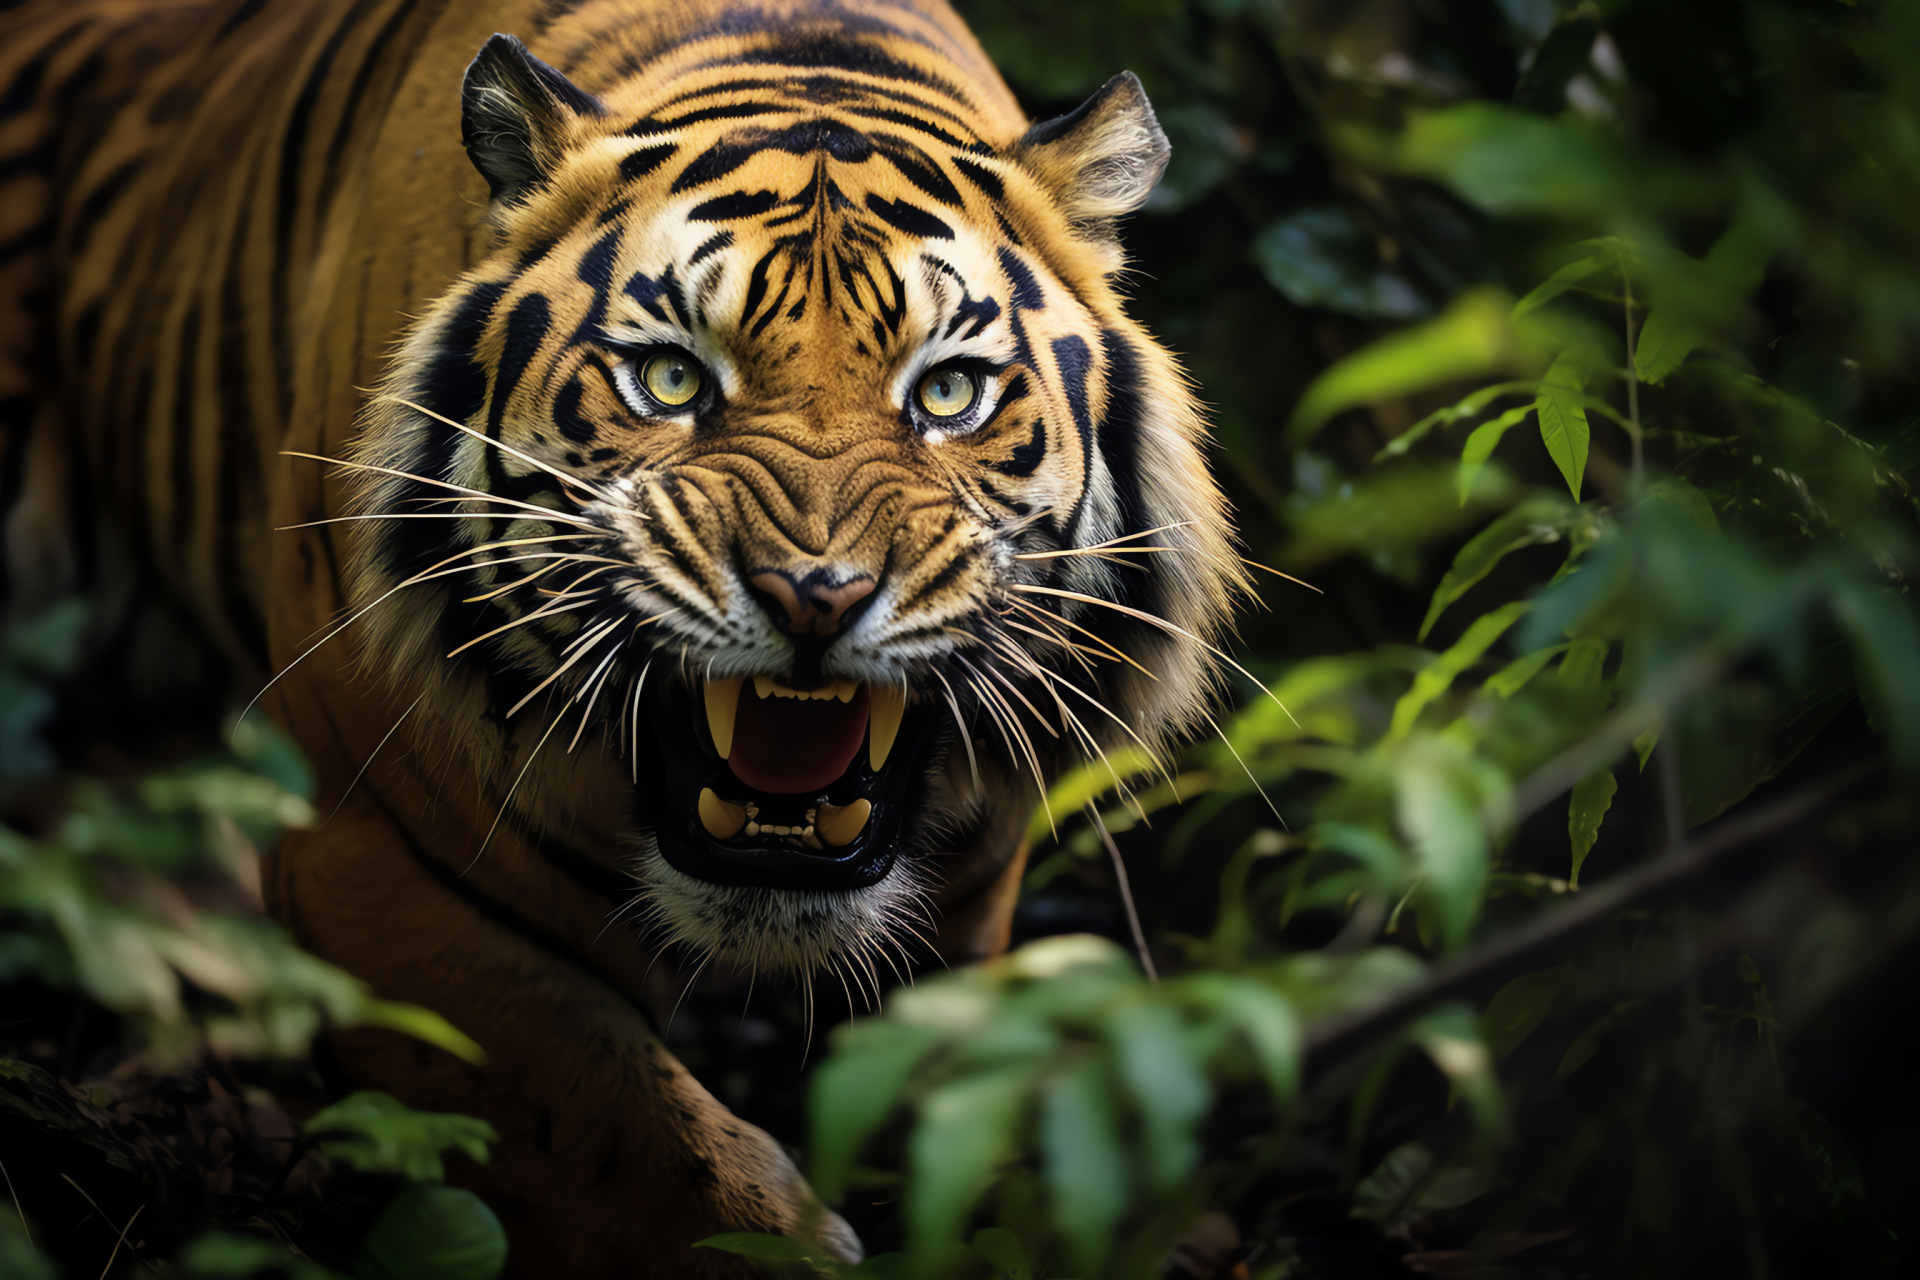 Saber Tooth Tiger, Smilodon cub, Prehistoric wildlife, Young predator, Jungle environment, HD Desktop Wallpaper